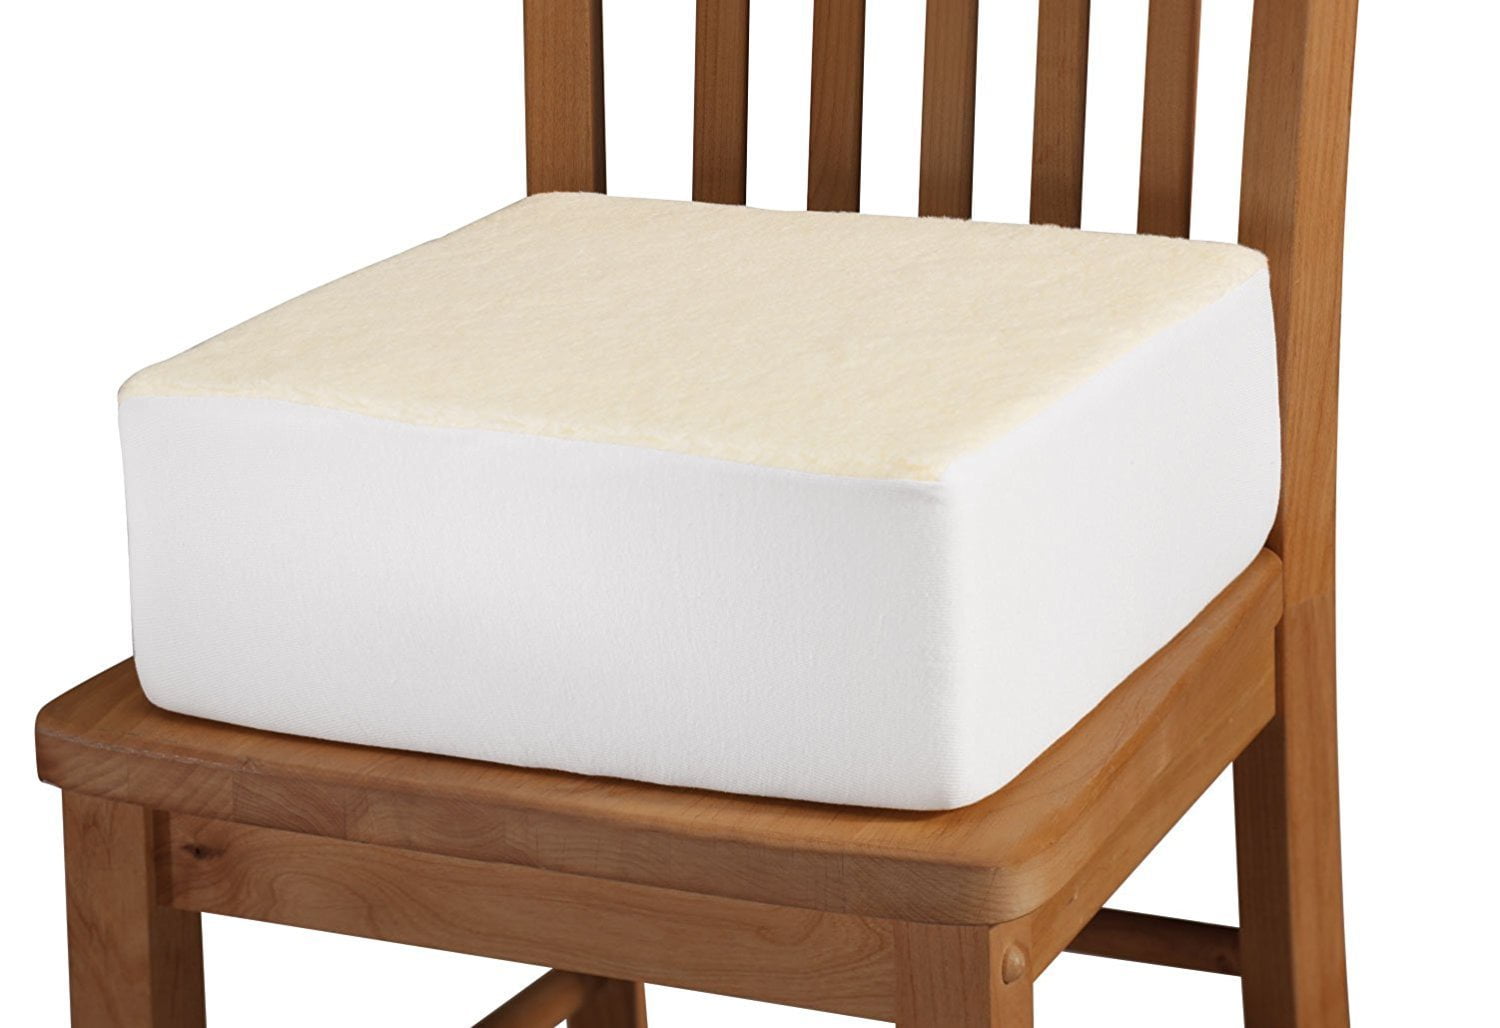 4 inch thick memory foam mattress full